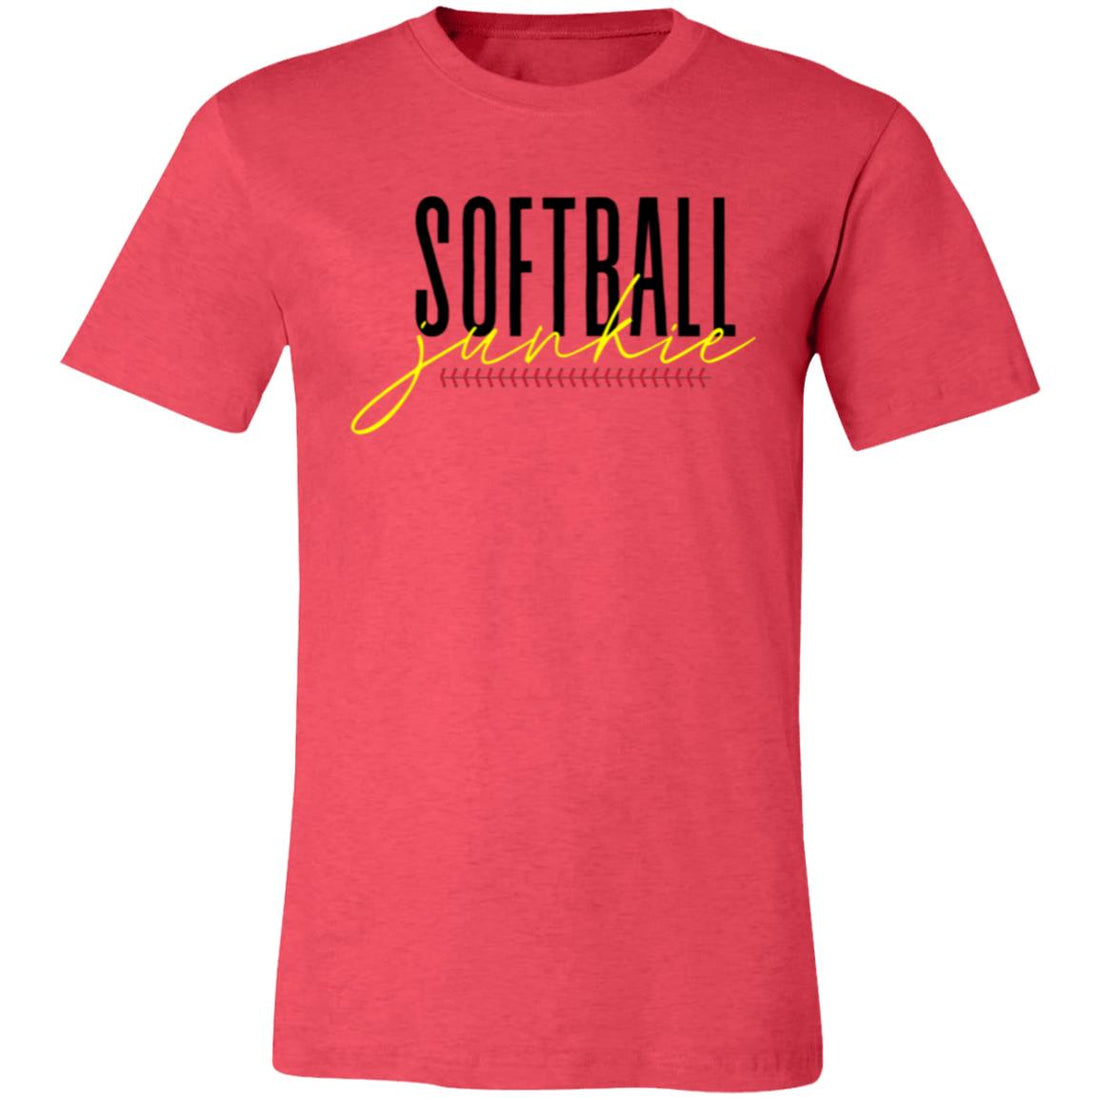 Softball Junkie Short-Sleeve T-Shirt - T-Shirts - Positively Sassy - Softball Junkie Short-Sleeve T-Shirt